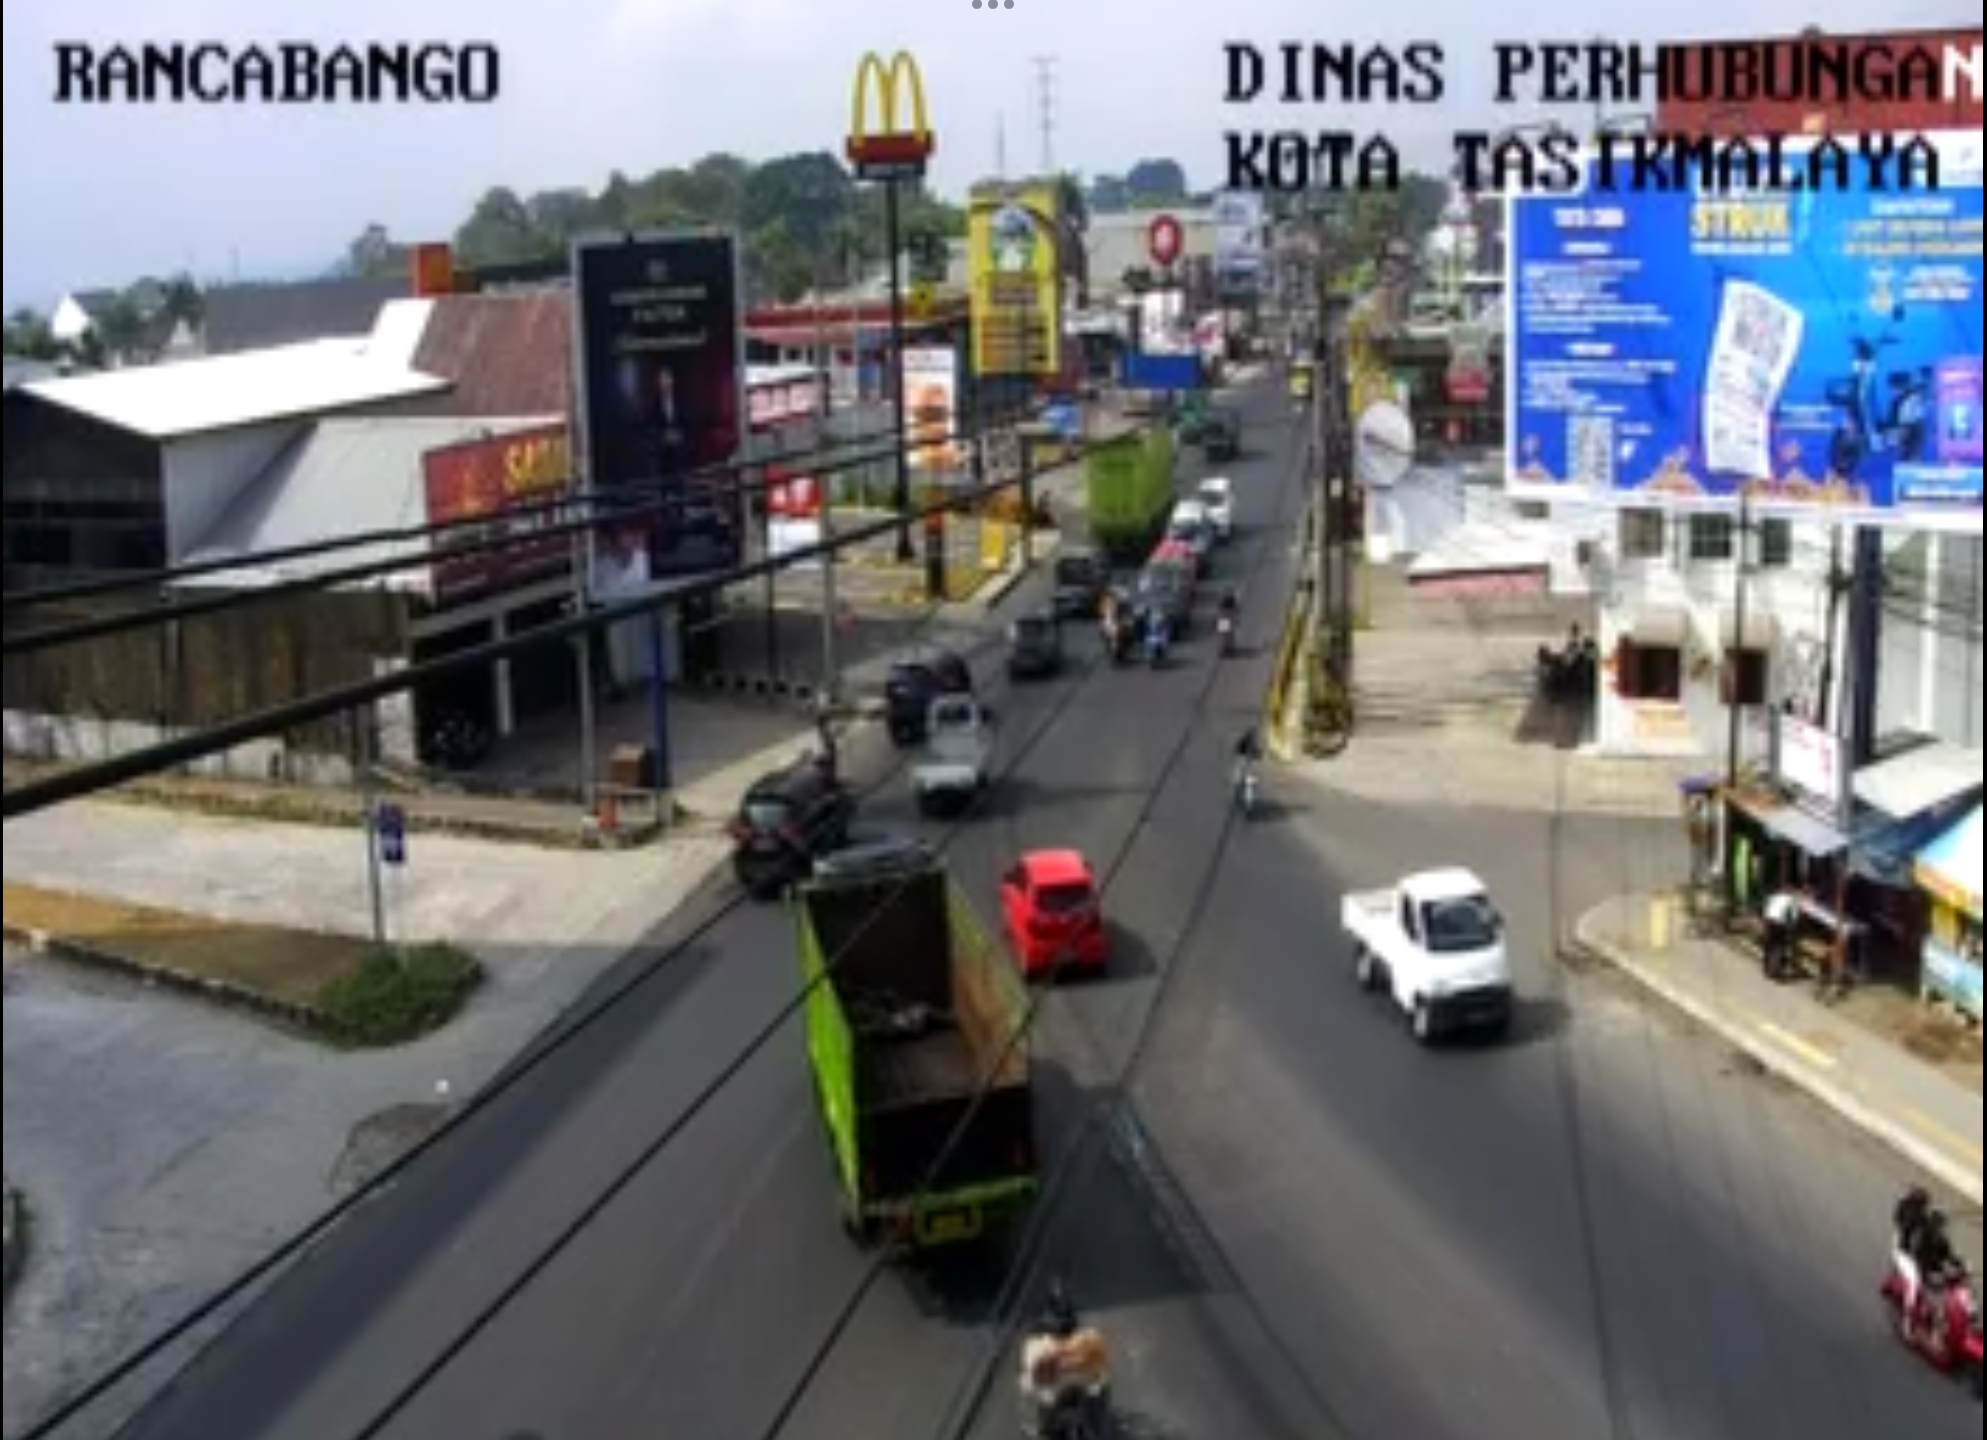 Nyambung ke Exit Jalan Tol Getaci, Rancabango Kota Tasikmalaya Jadi Tujuan Investor